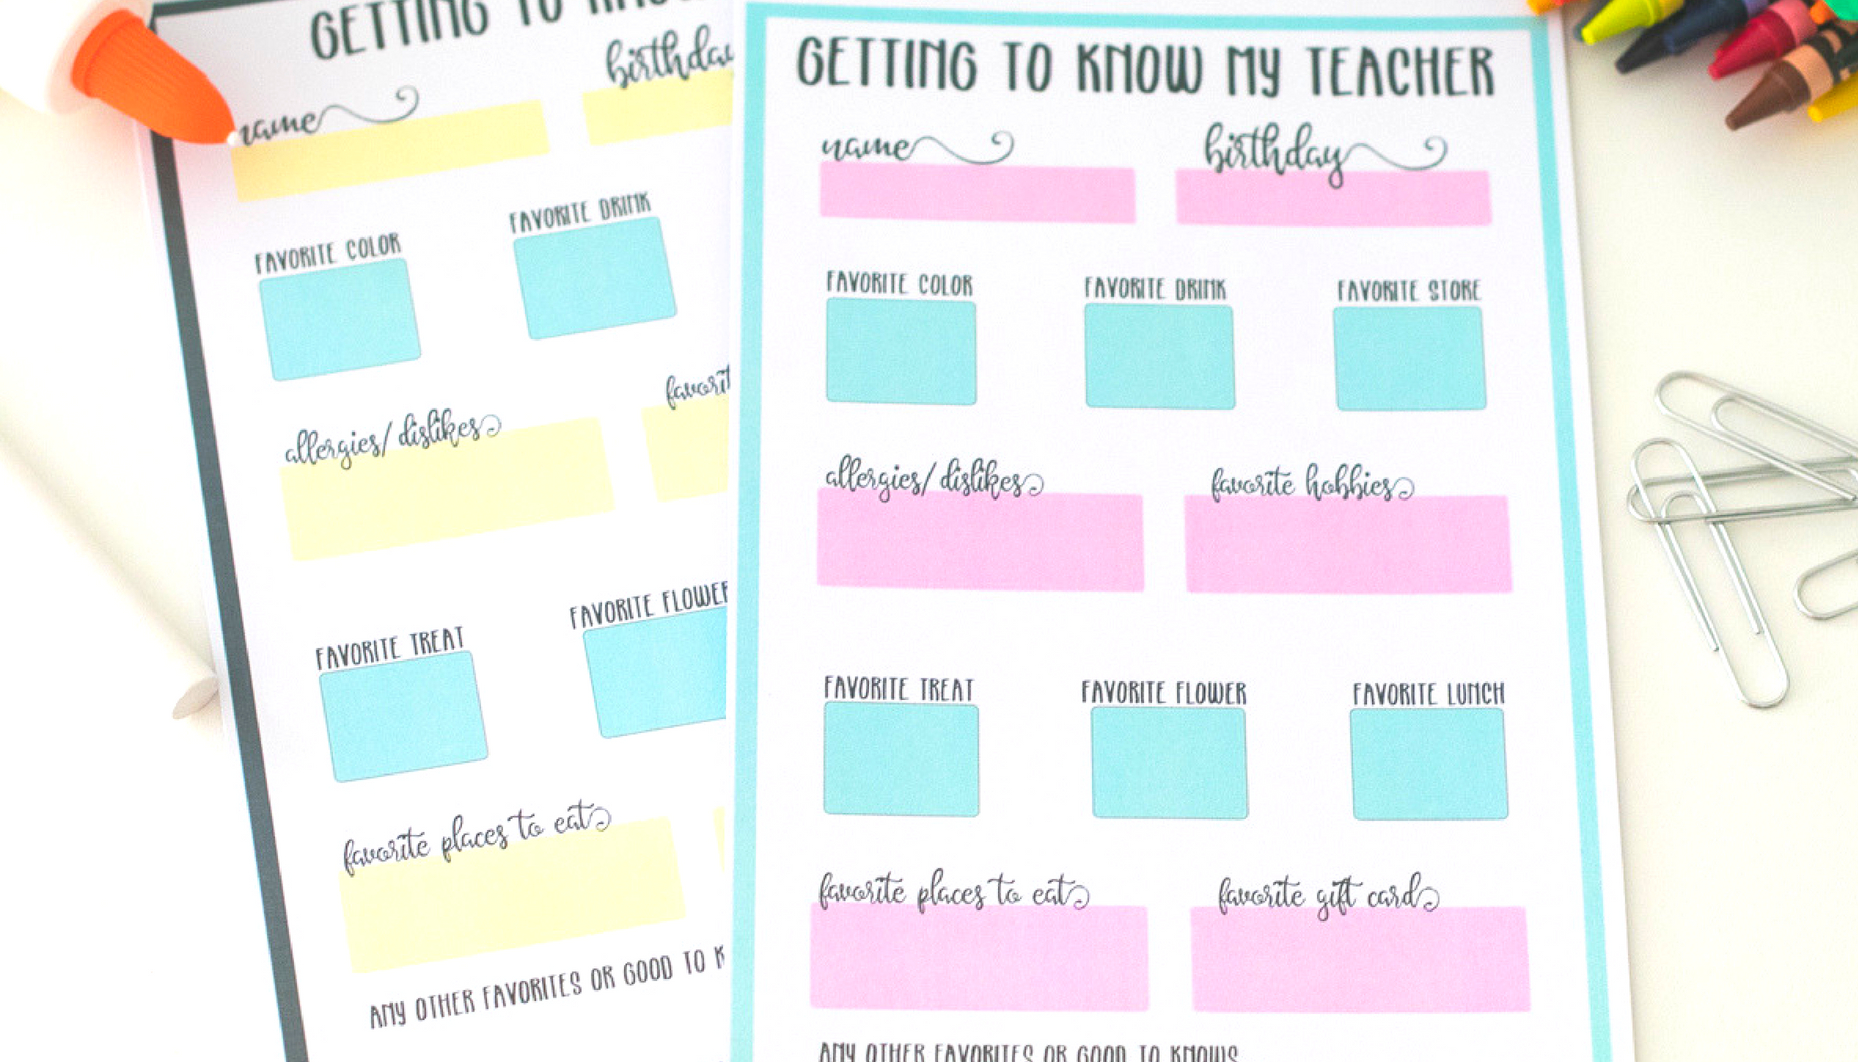 Get To Know My Teacher Free Printable Questionnaire - All About My Teacher Free Printable